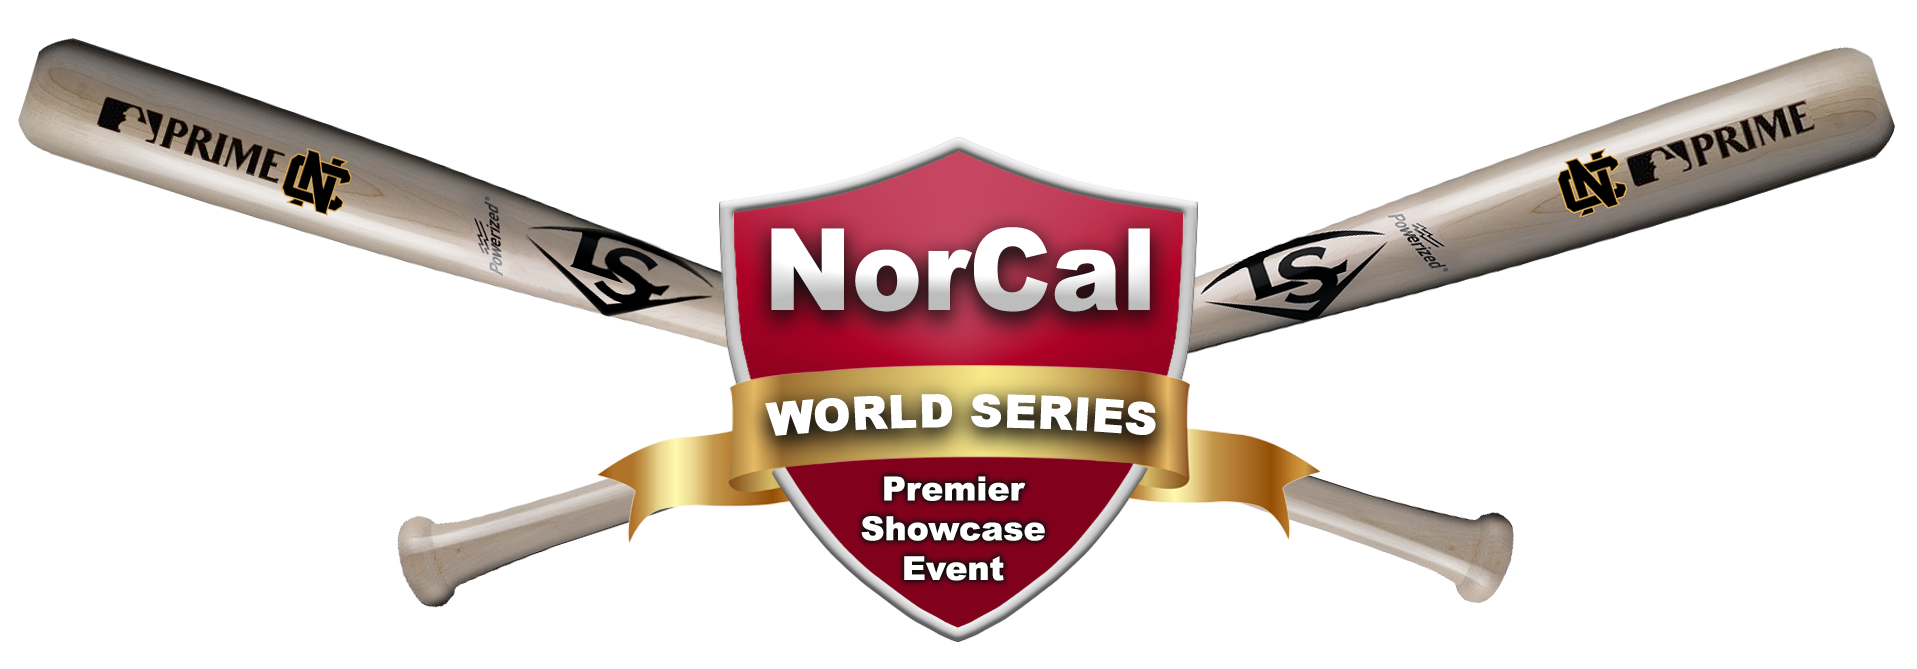 NorCal World Series